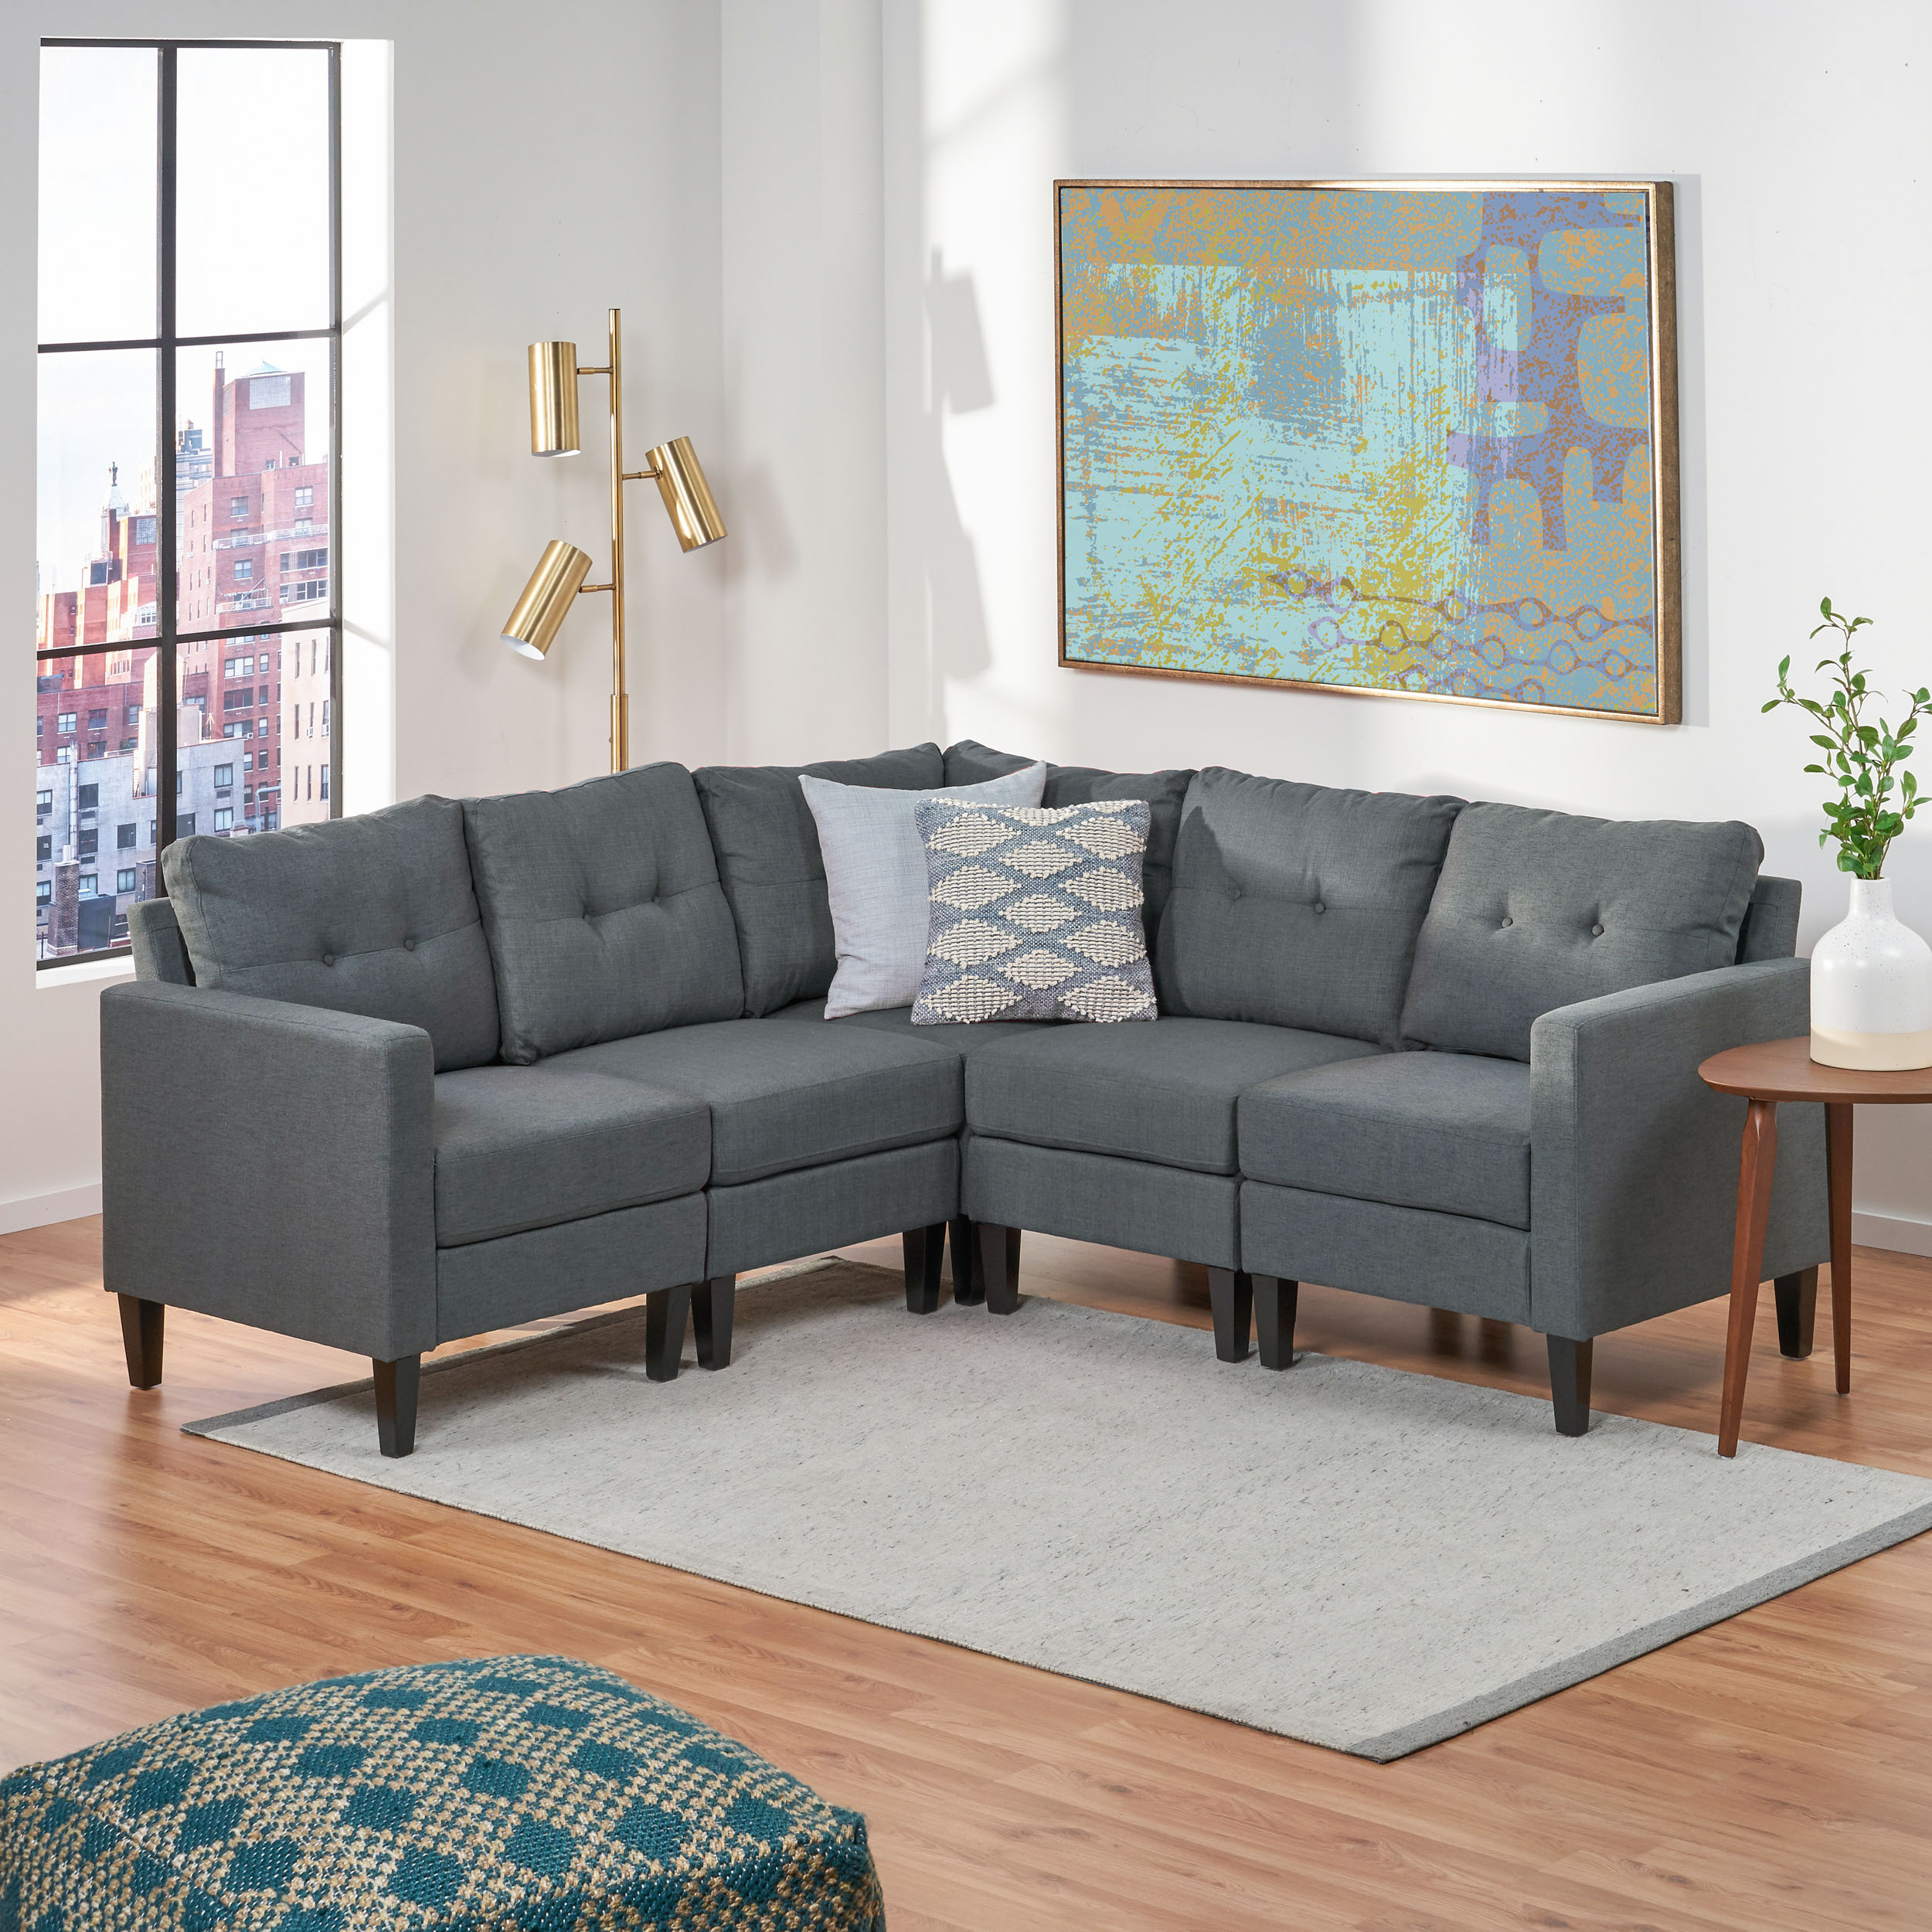 Niya Mid Century Modern 5 Piece Fabric Sectional Sofa - Navy Blue